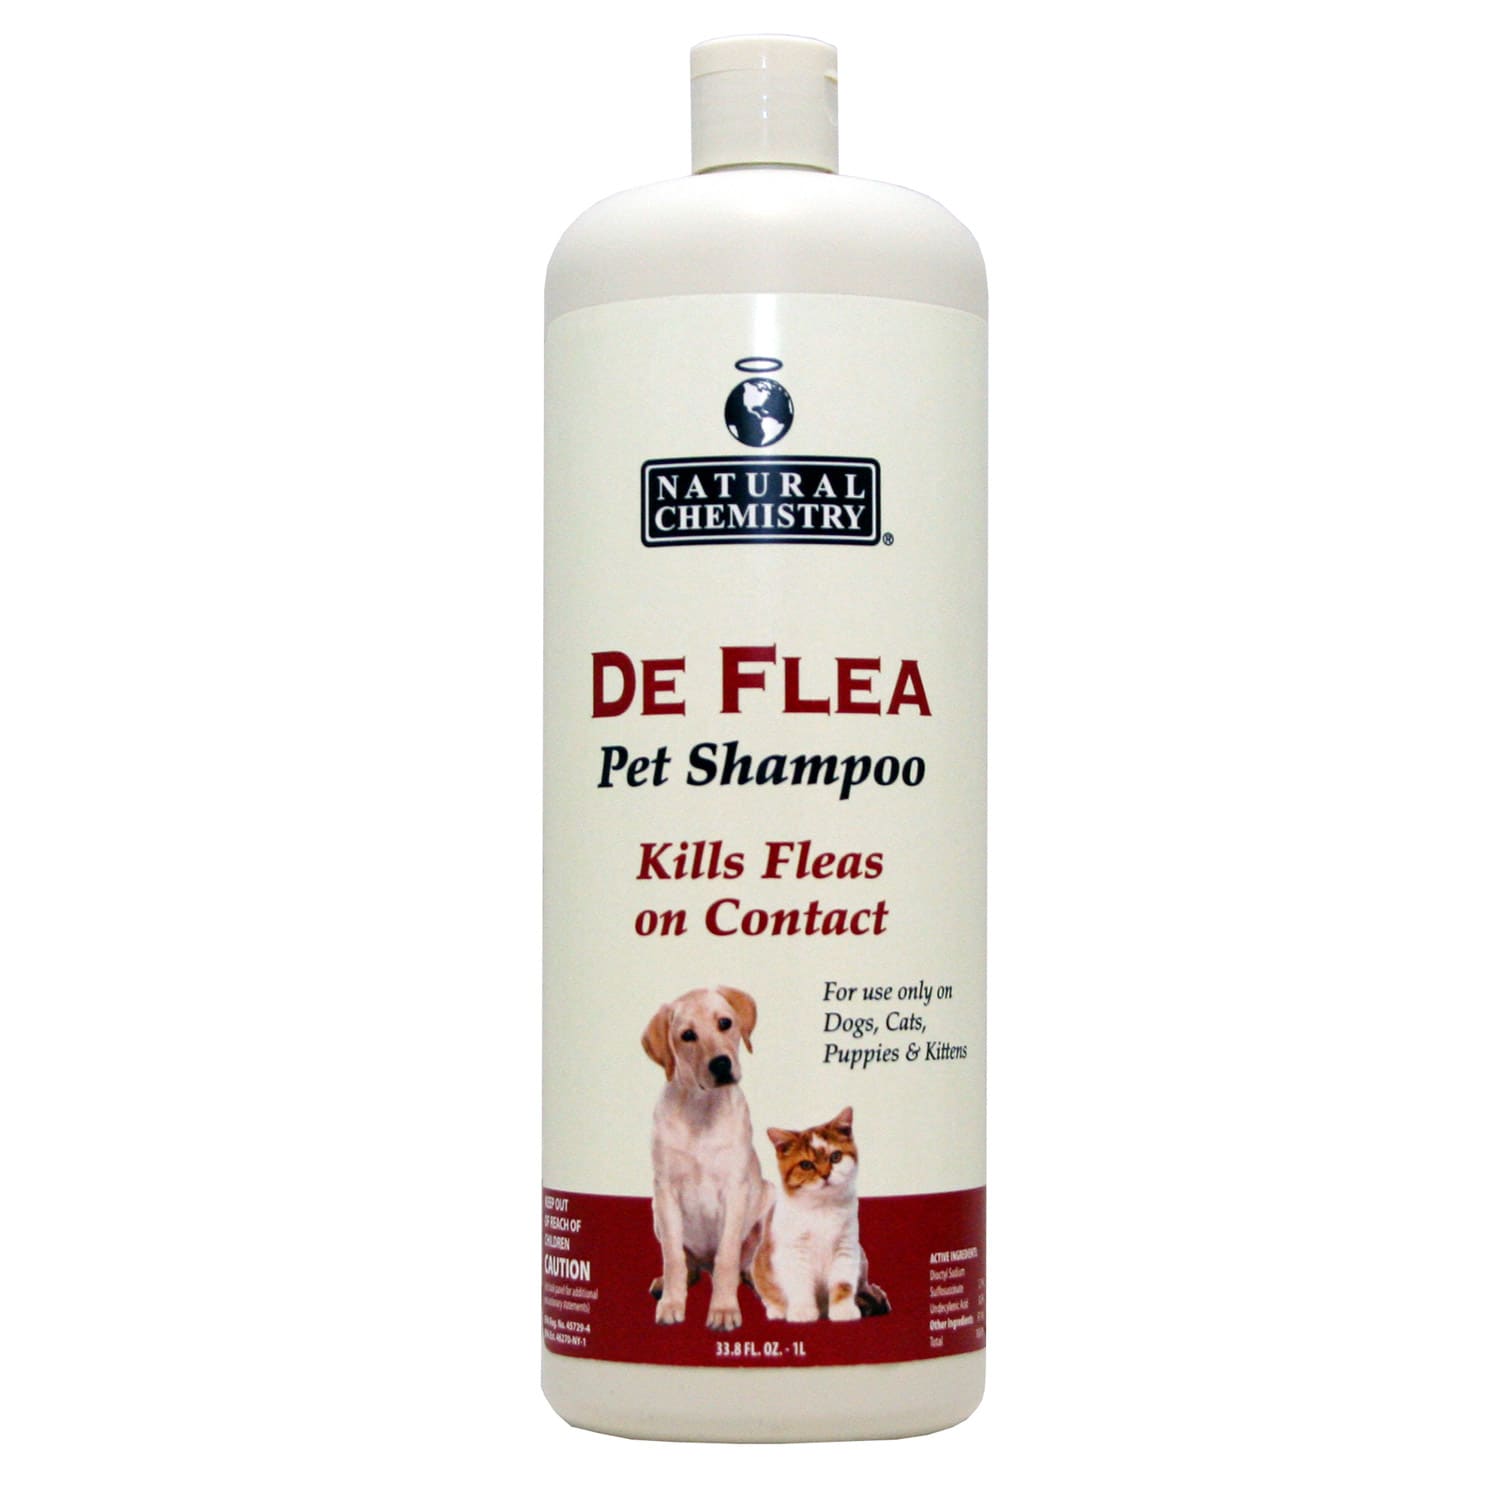 Natural Chemistry De Flea Pet Shampoo, 33.3 oz. Petco